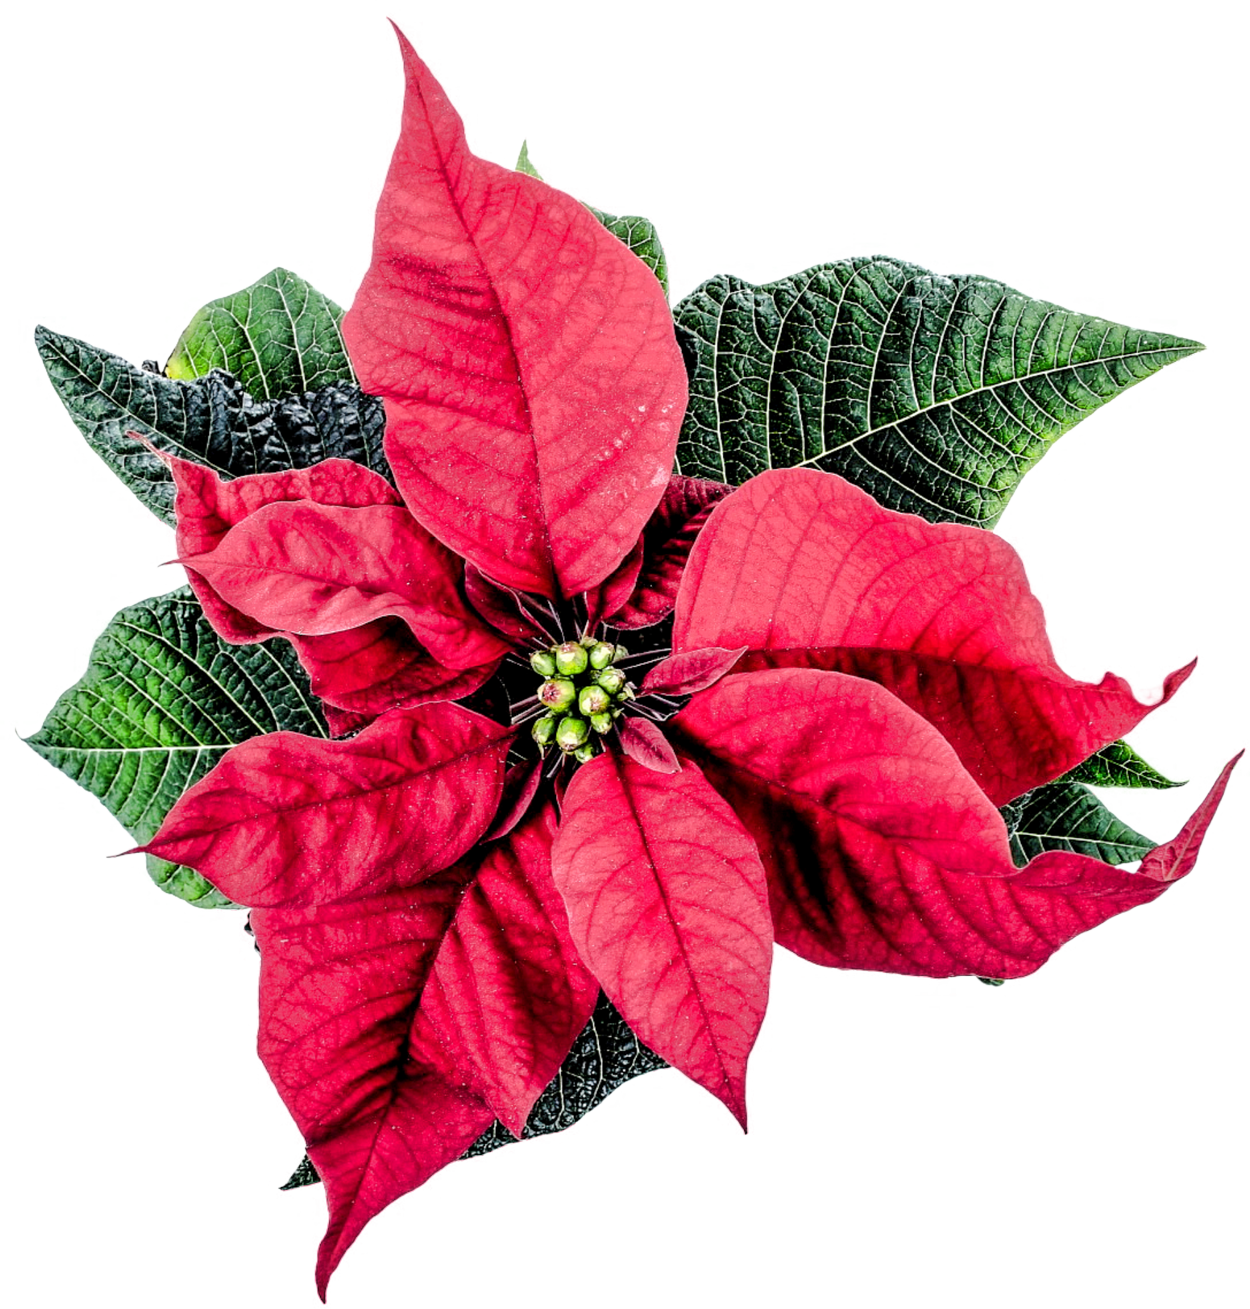 Christmas Poinsettia Flower PNG Image - PurePNG | Free transparent CC0 ...